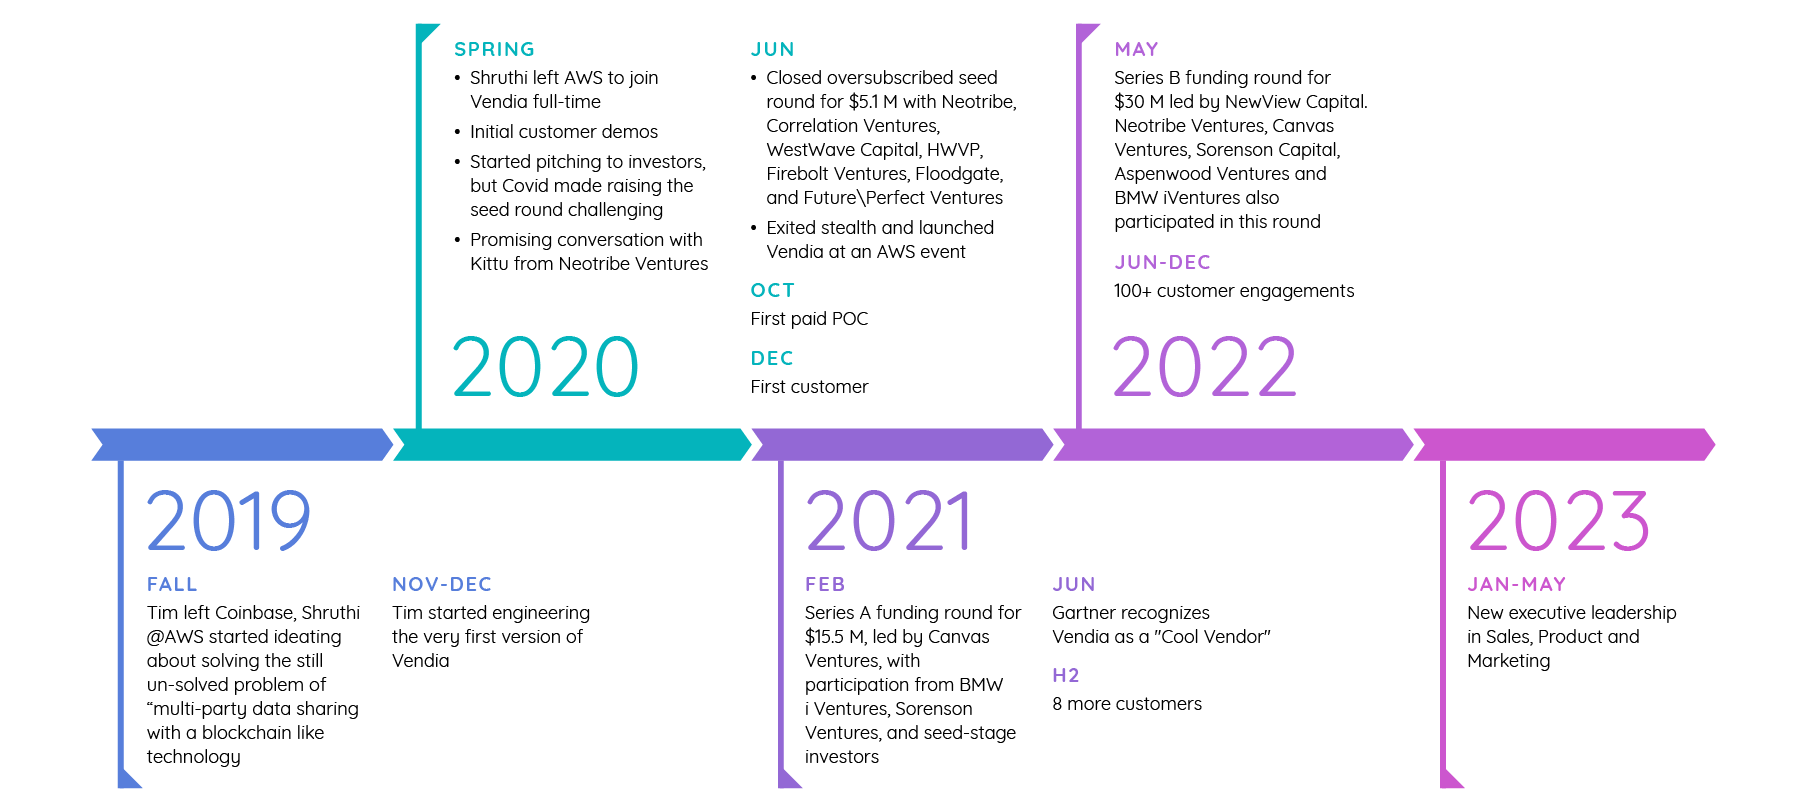 Vendia 2019 to 2023 milestones